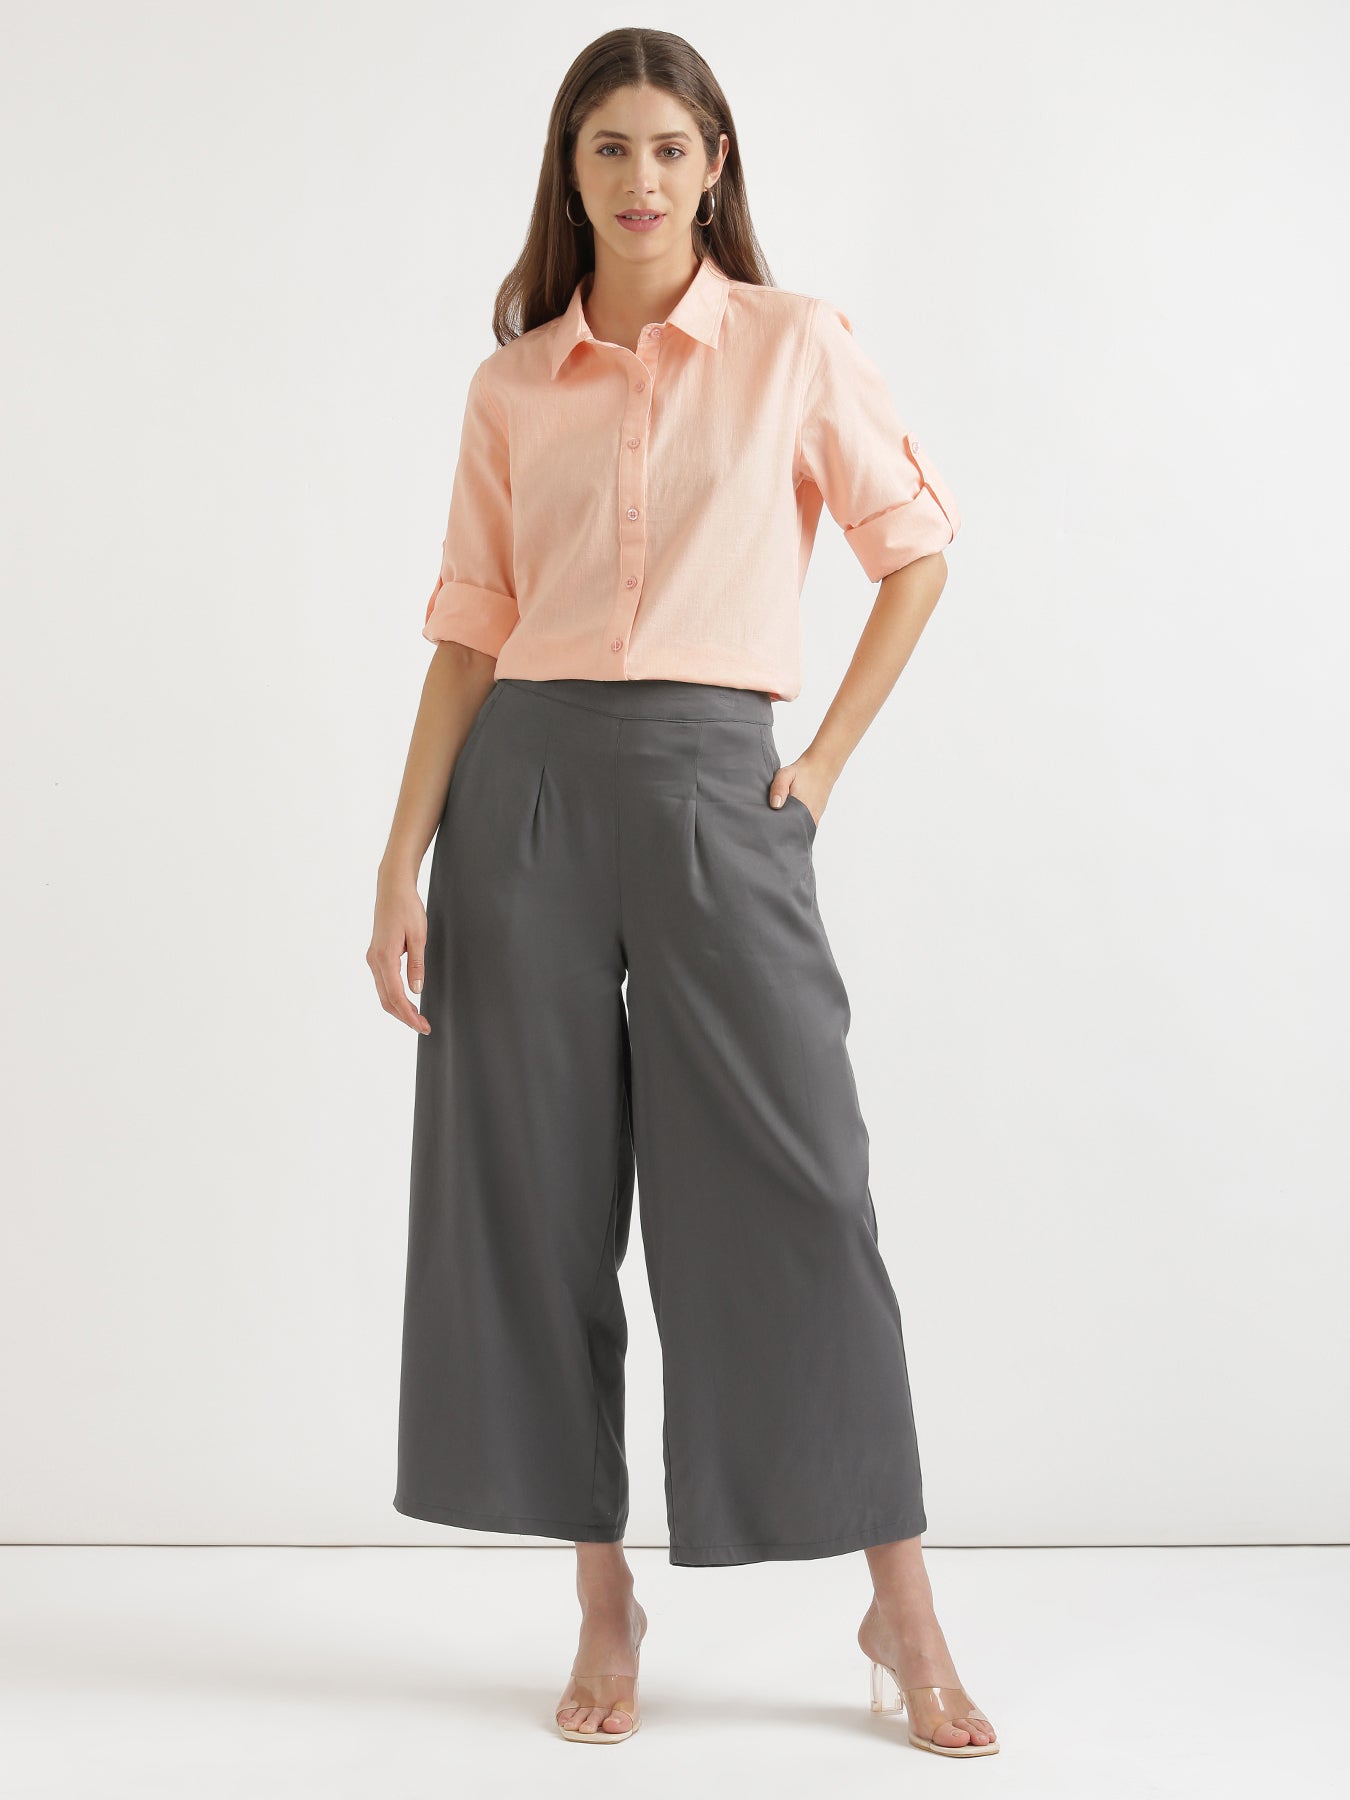 Grey Palazzo Pants For Women  Shop online from सादा /SAADAA